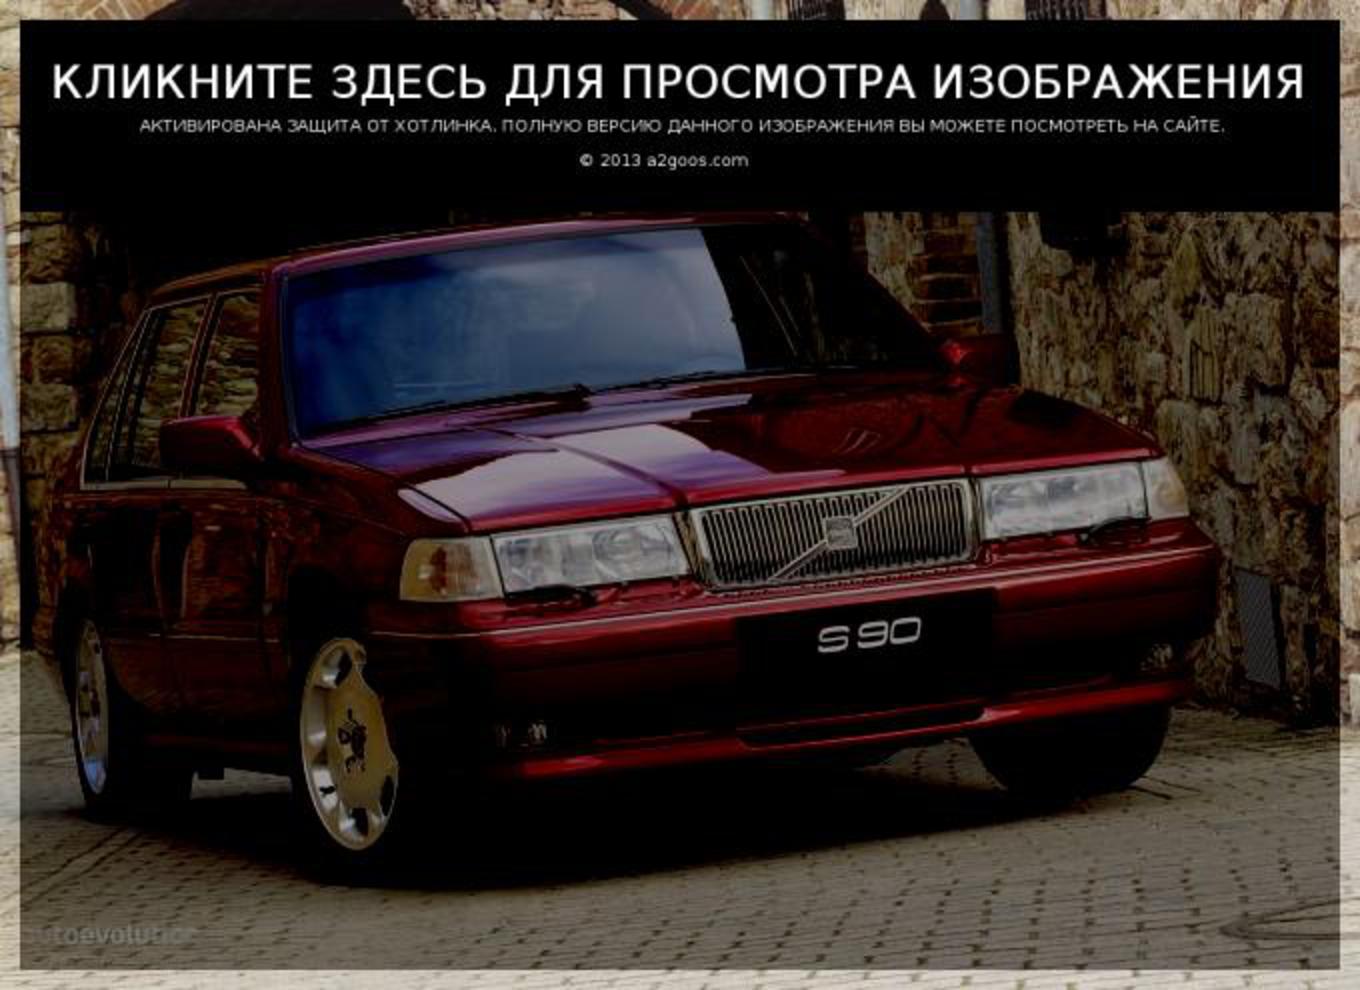 Volvo S90: 09 Ñ„Ð¾Ñ‚Ð¾